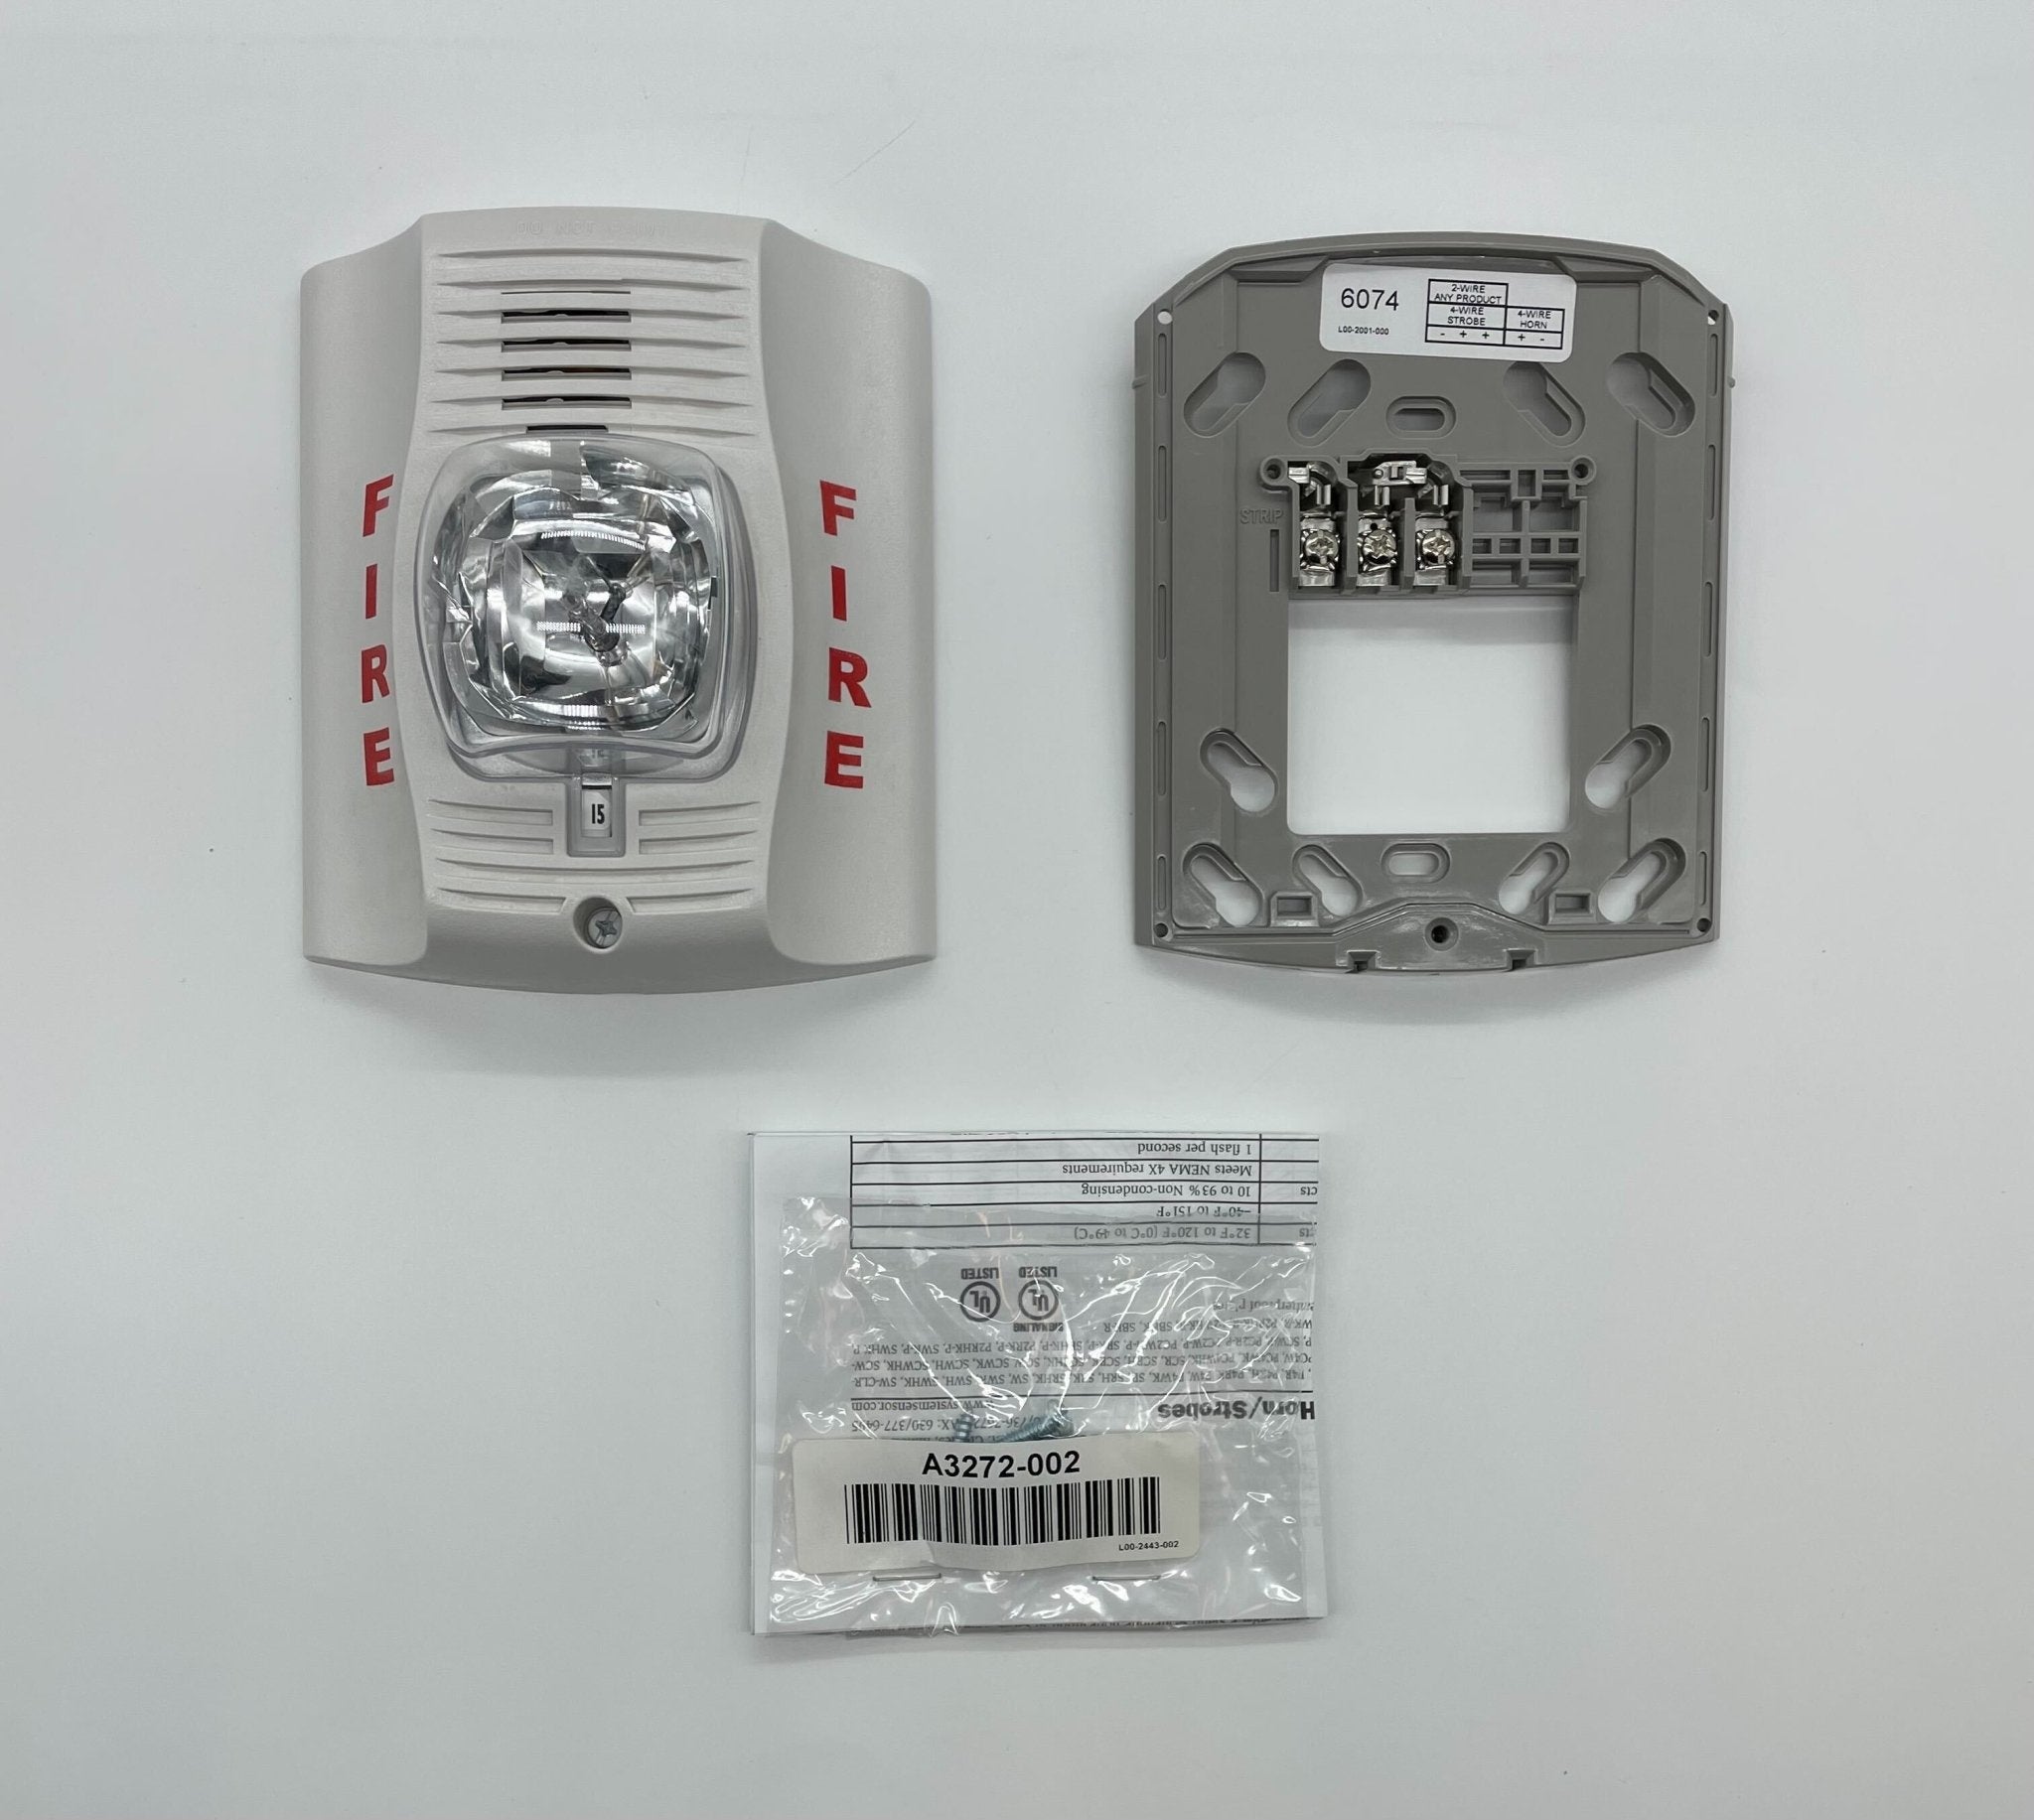 System Sensor P2W - The Fire Alarm Supplier